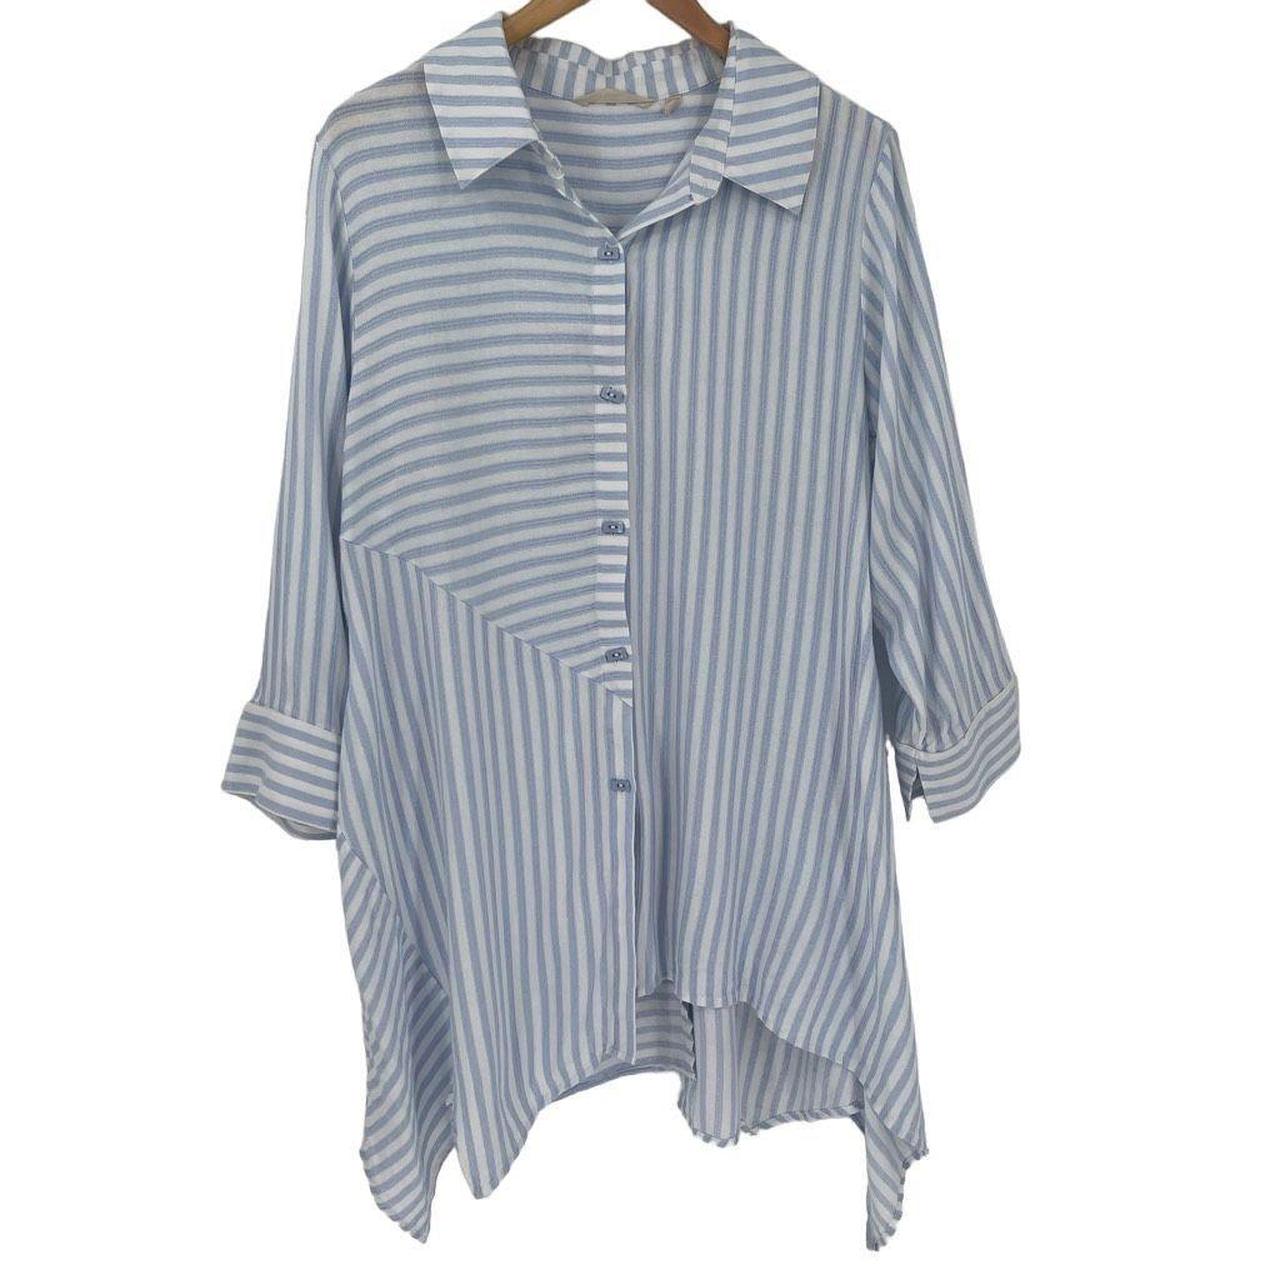 Soft Surroundings Size Xl Women's Blue-White Stripe Button Up